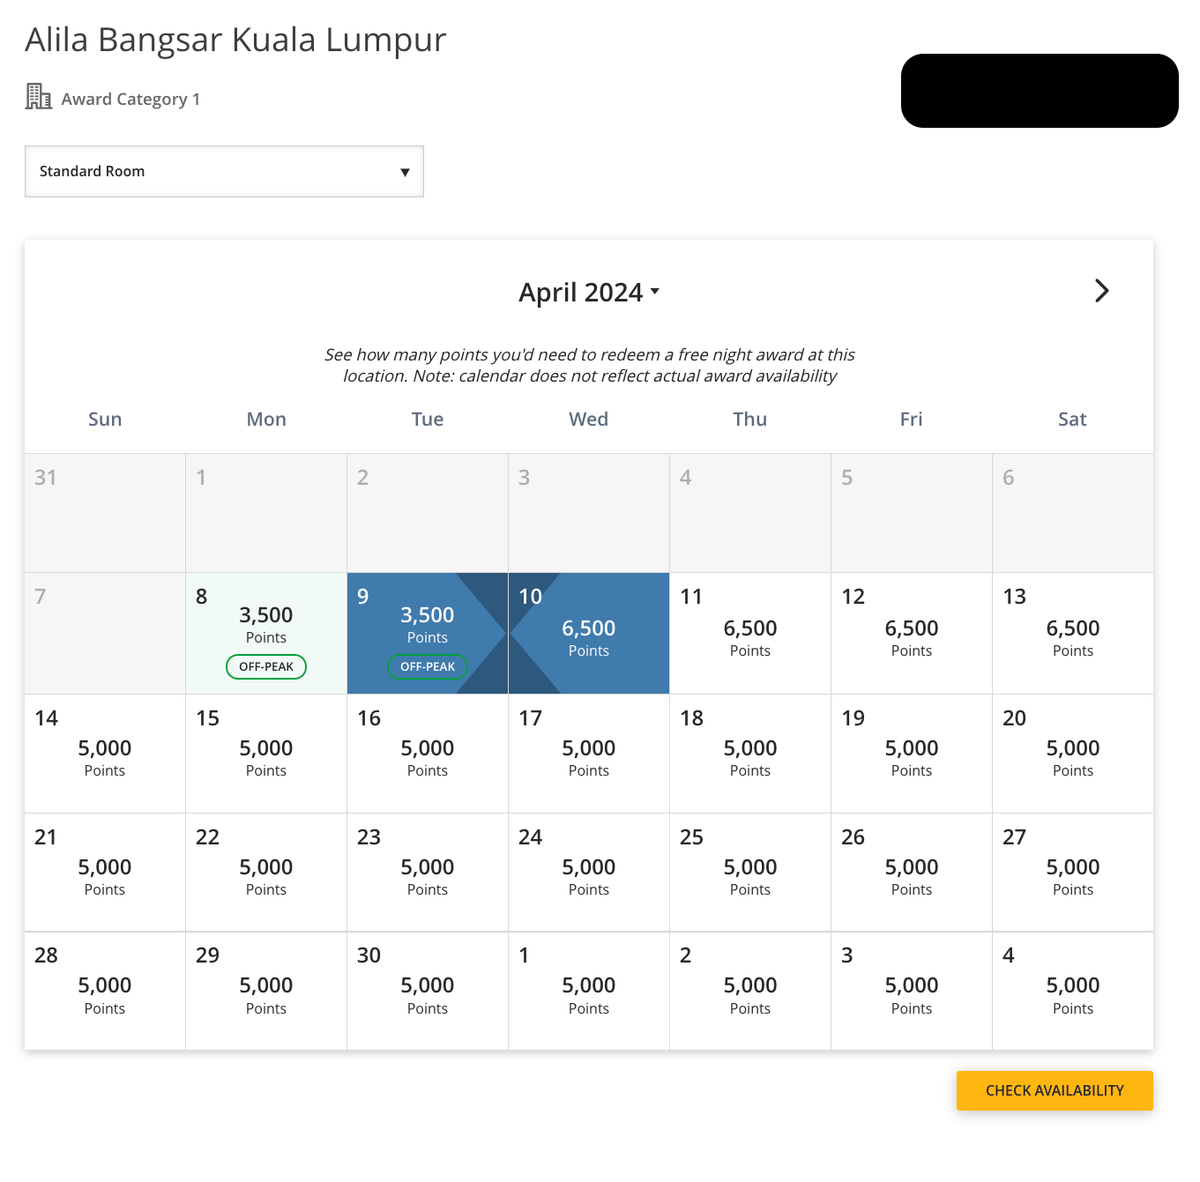 Alila Bangsar Kuala Lumpur April 2024 points calendar